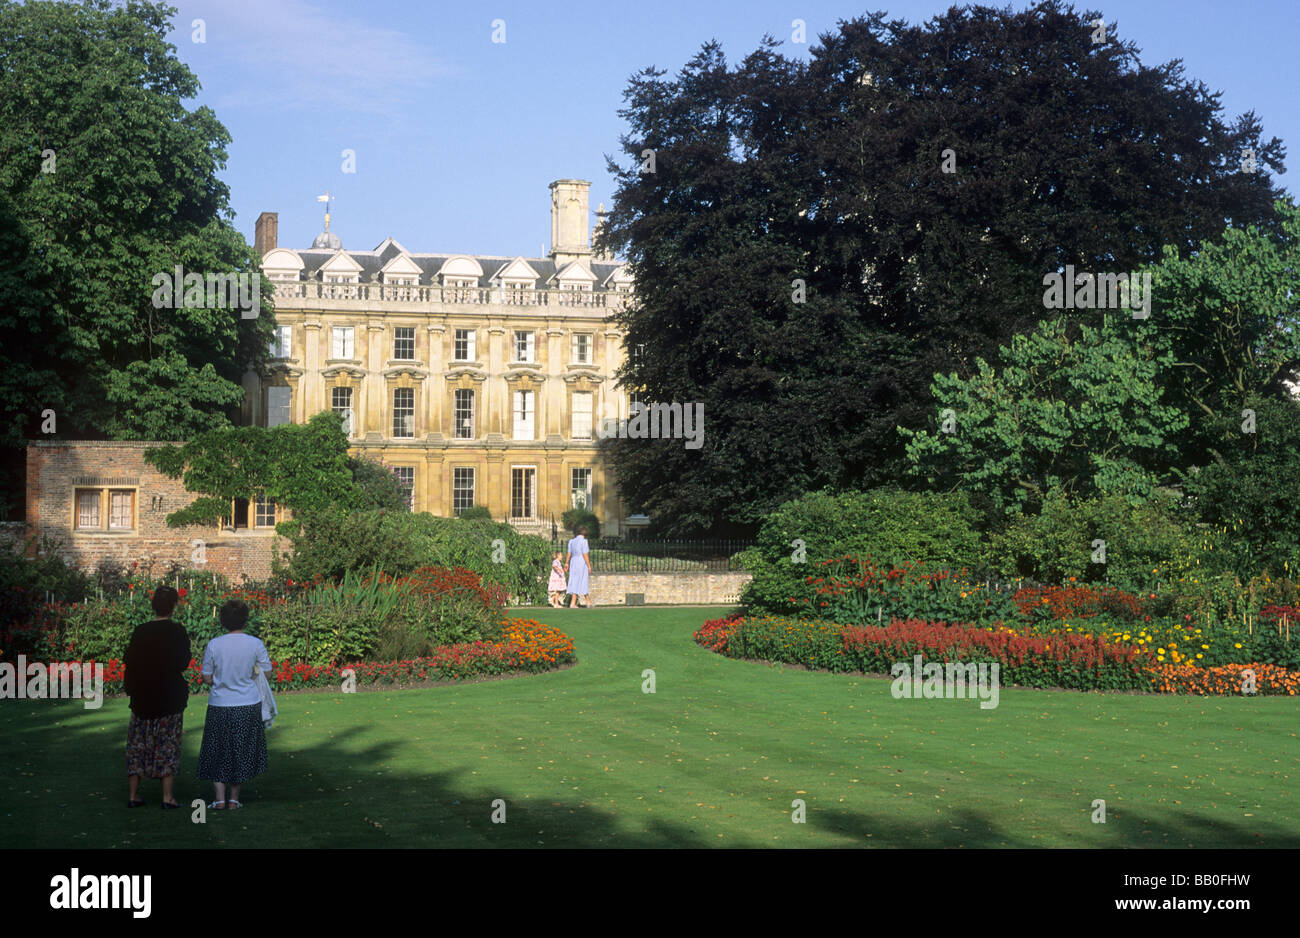 Clare College and gardens Cambridge University Englabd UK English universities Stock Photo